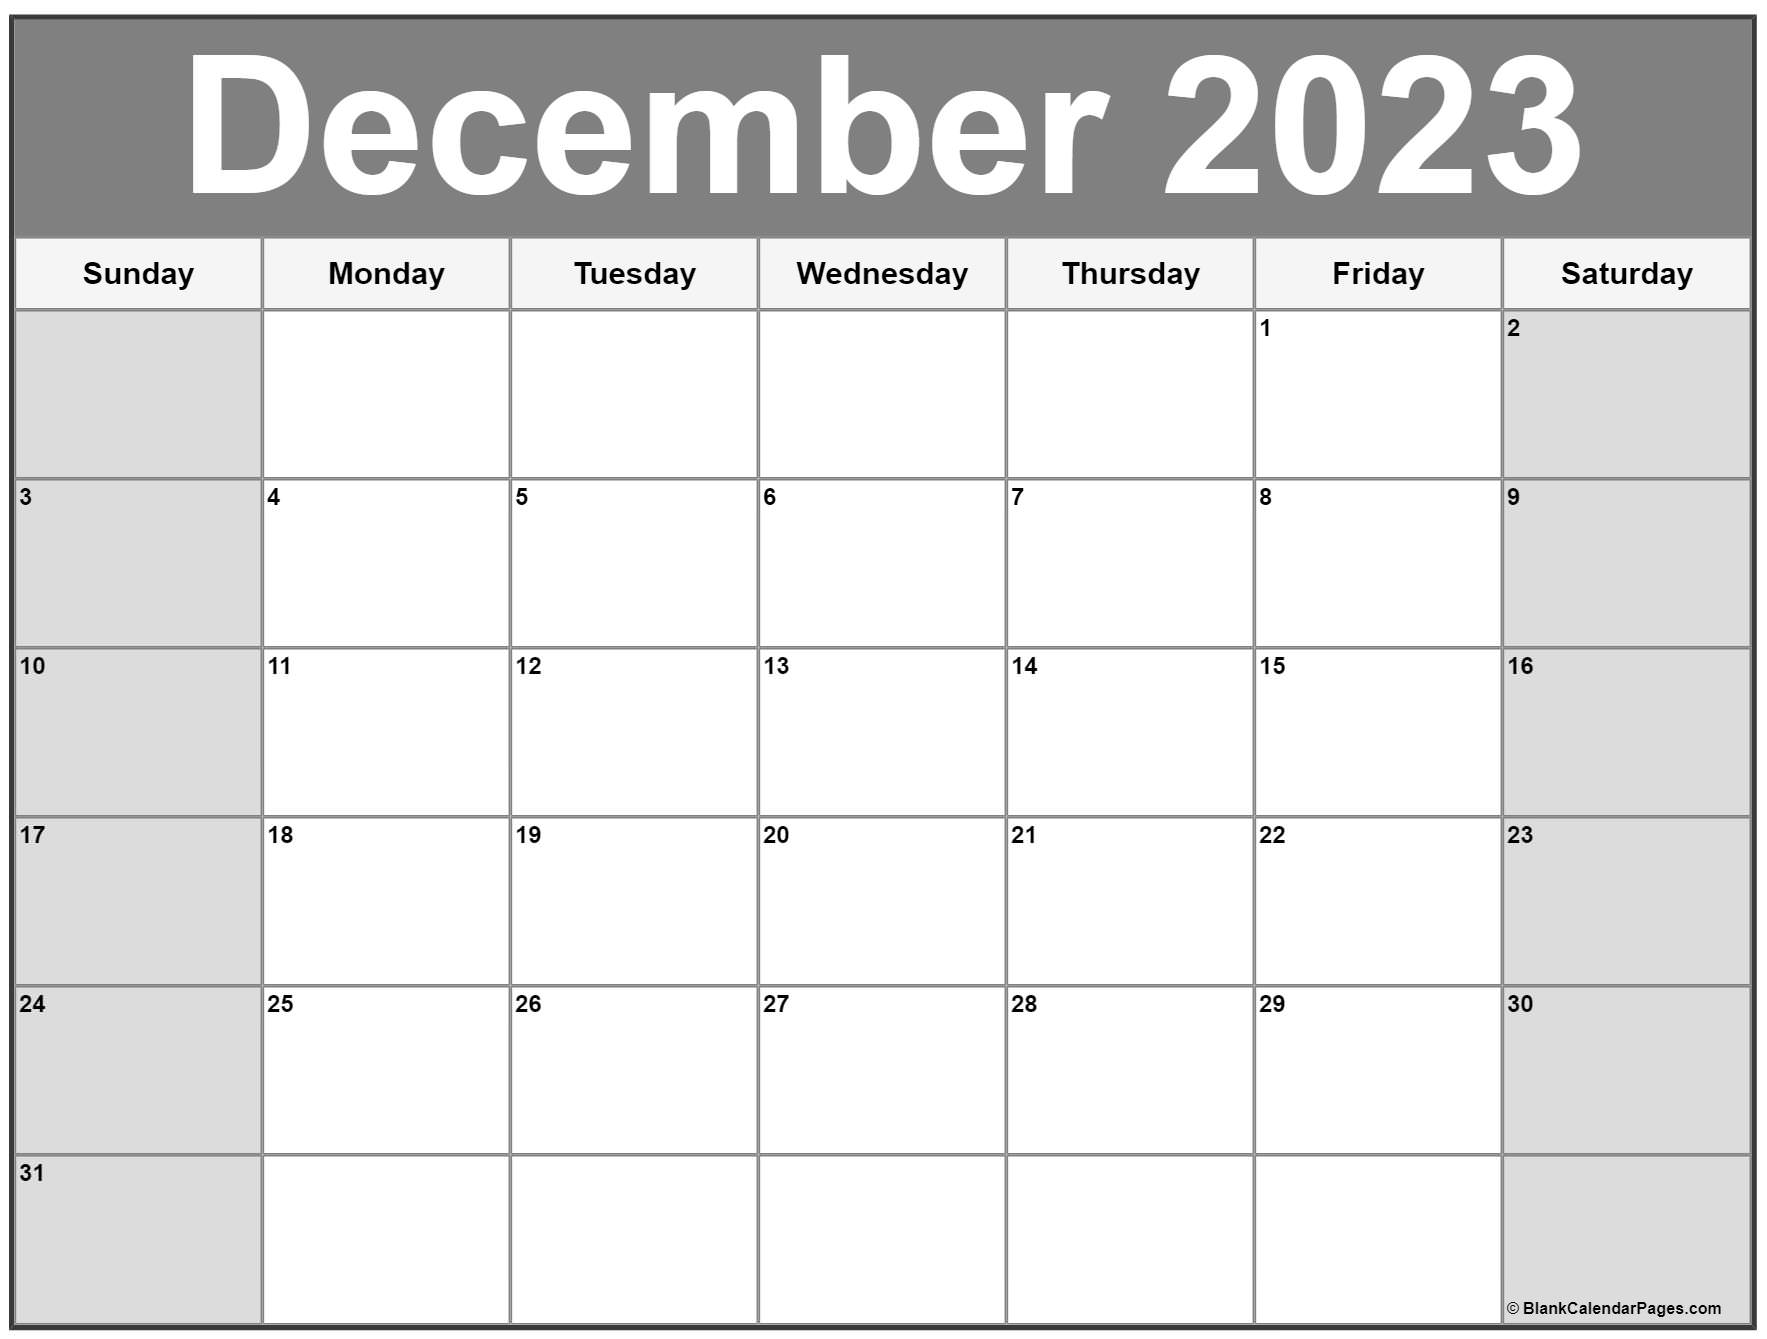 december-2023-monday-calendar-monday-to-sunday-december-2023-monday